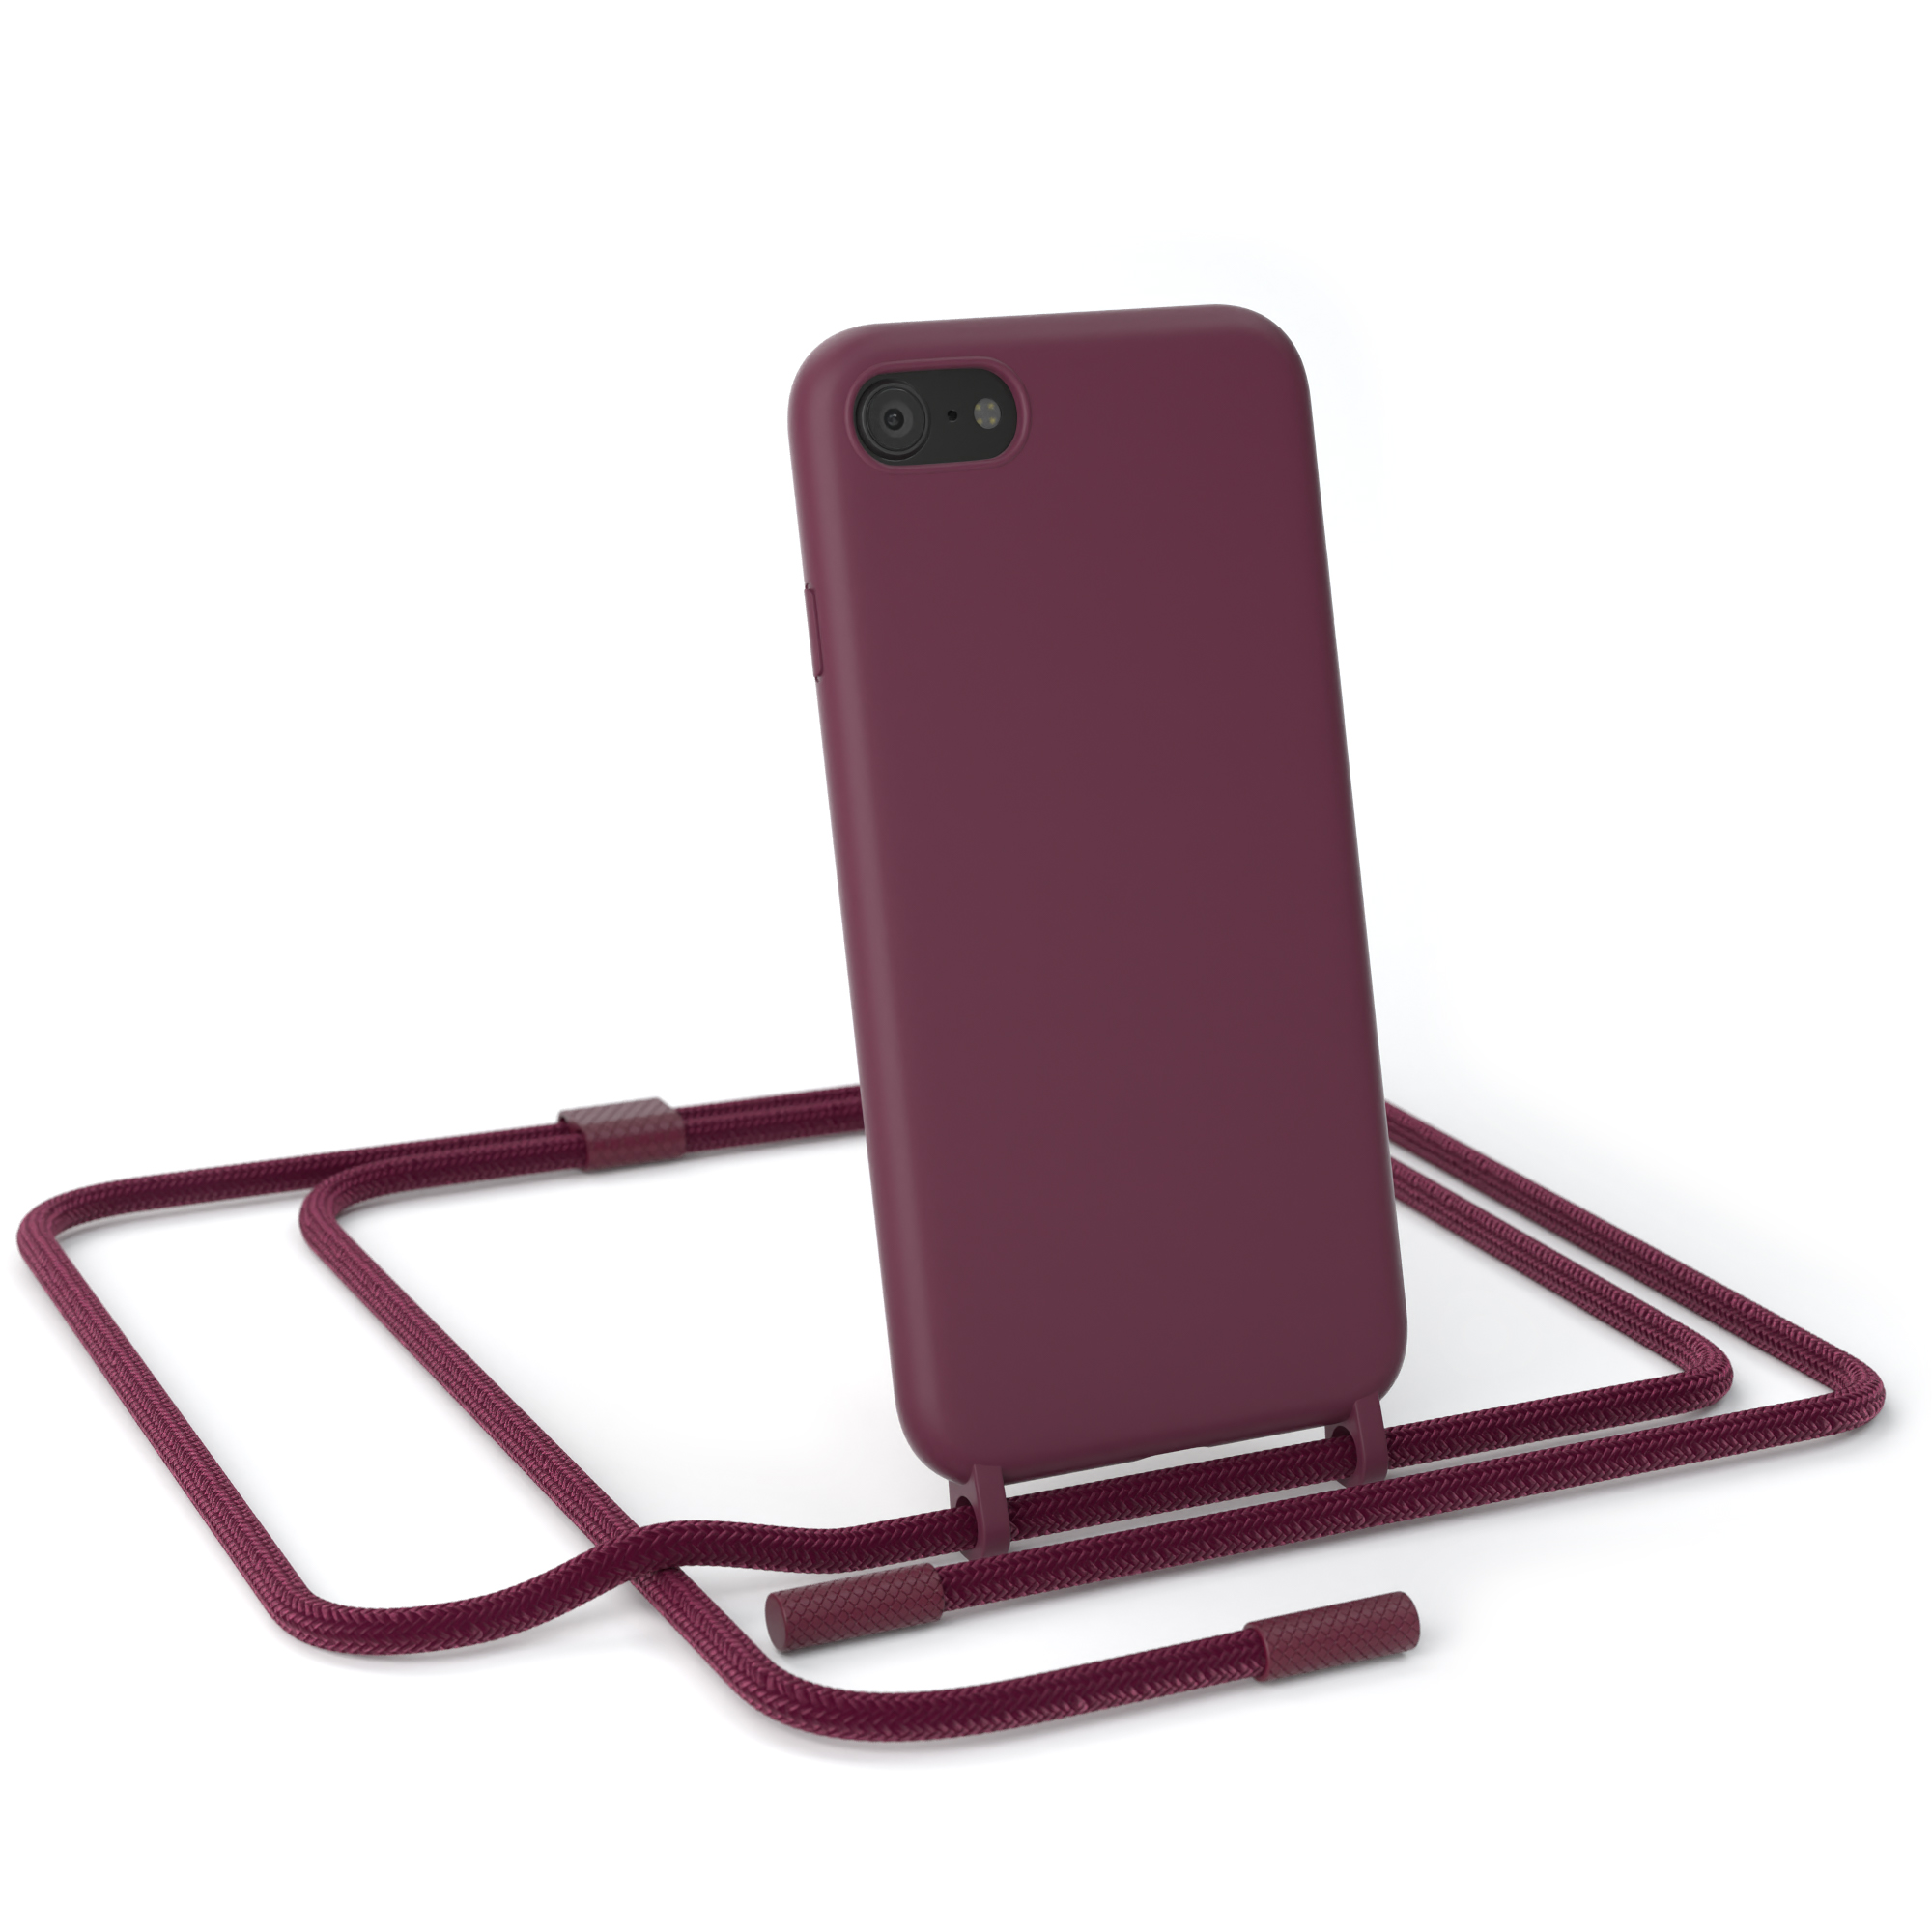 EAZY CASE Runde / Apple, Rot 2022 SE / 7 iPhone Umhängetasche, Burgundy Beere Handykette 8, Full Color, 2020, / SE iPhone